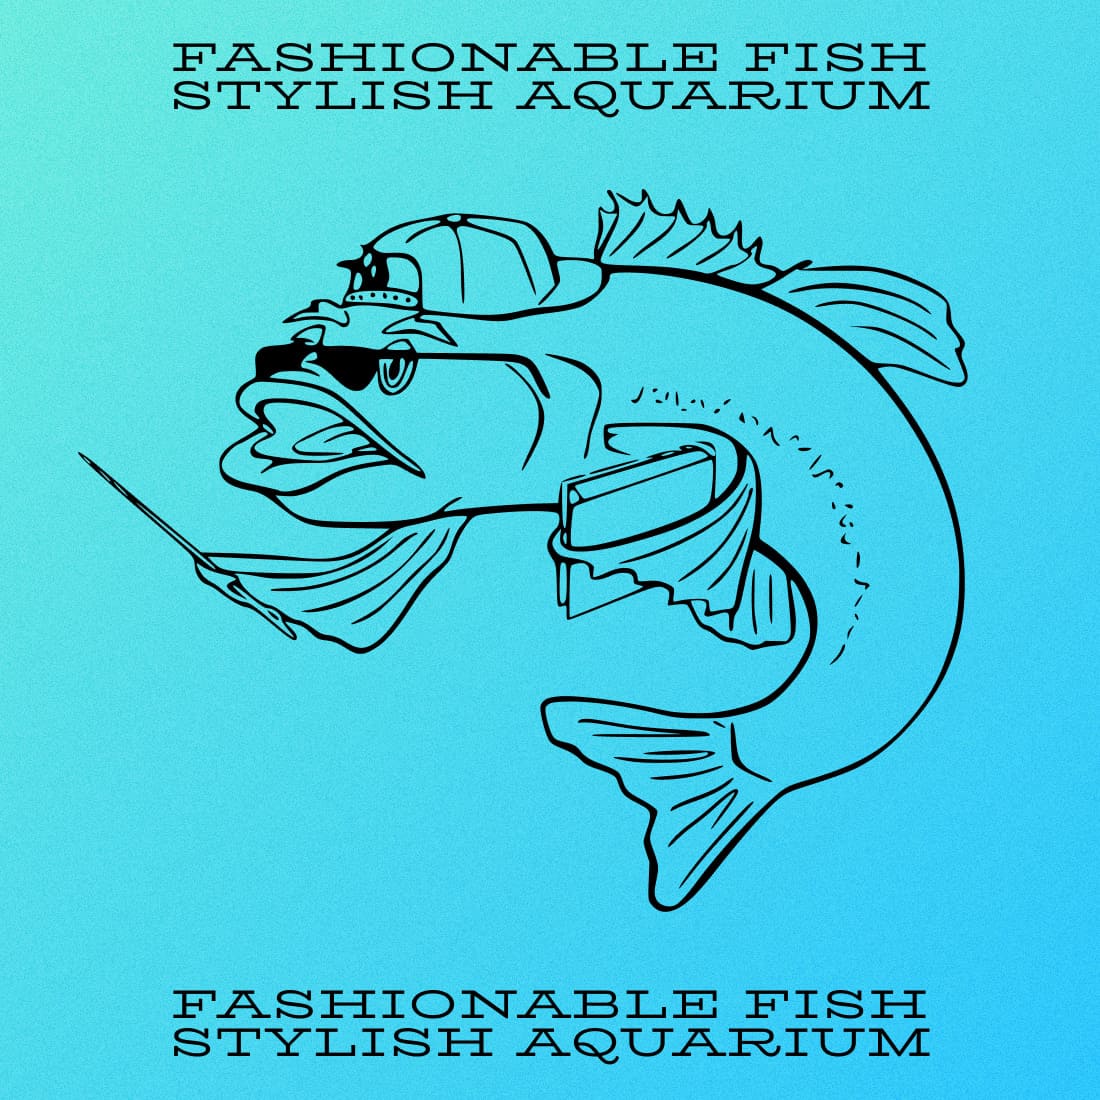 Fashionable Fish Stylish Aquarium - Bright Colorful Example.